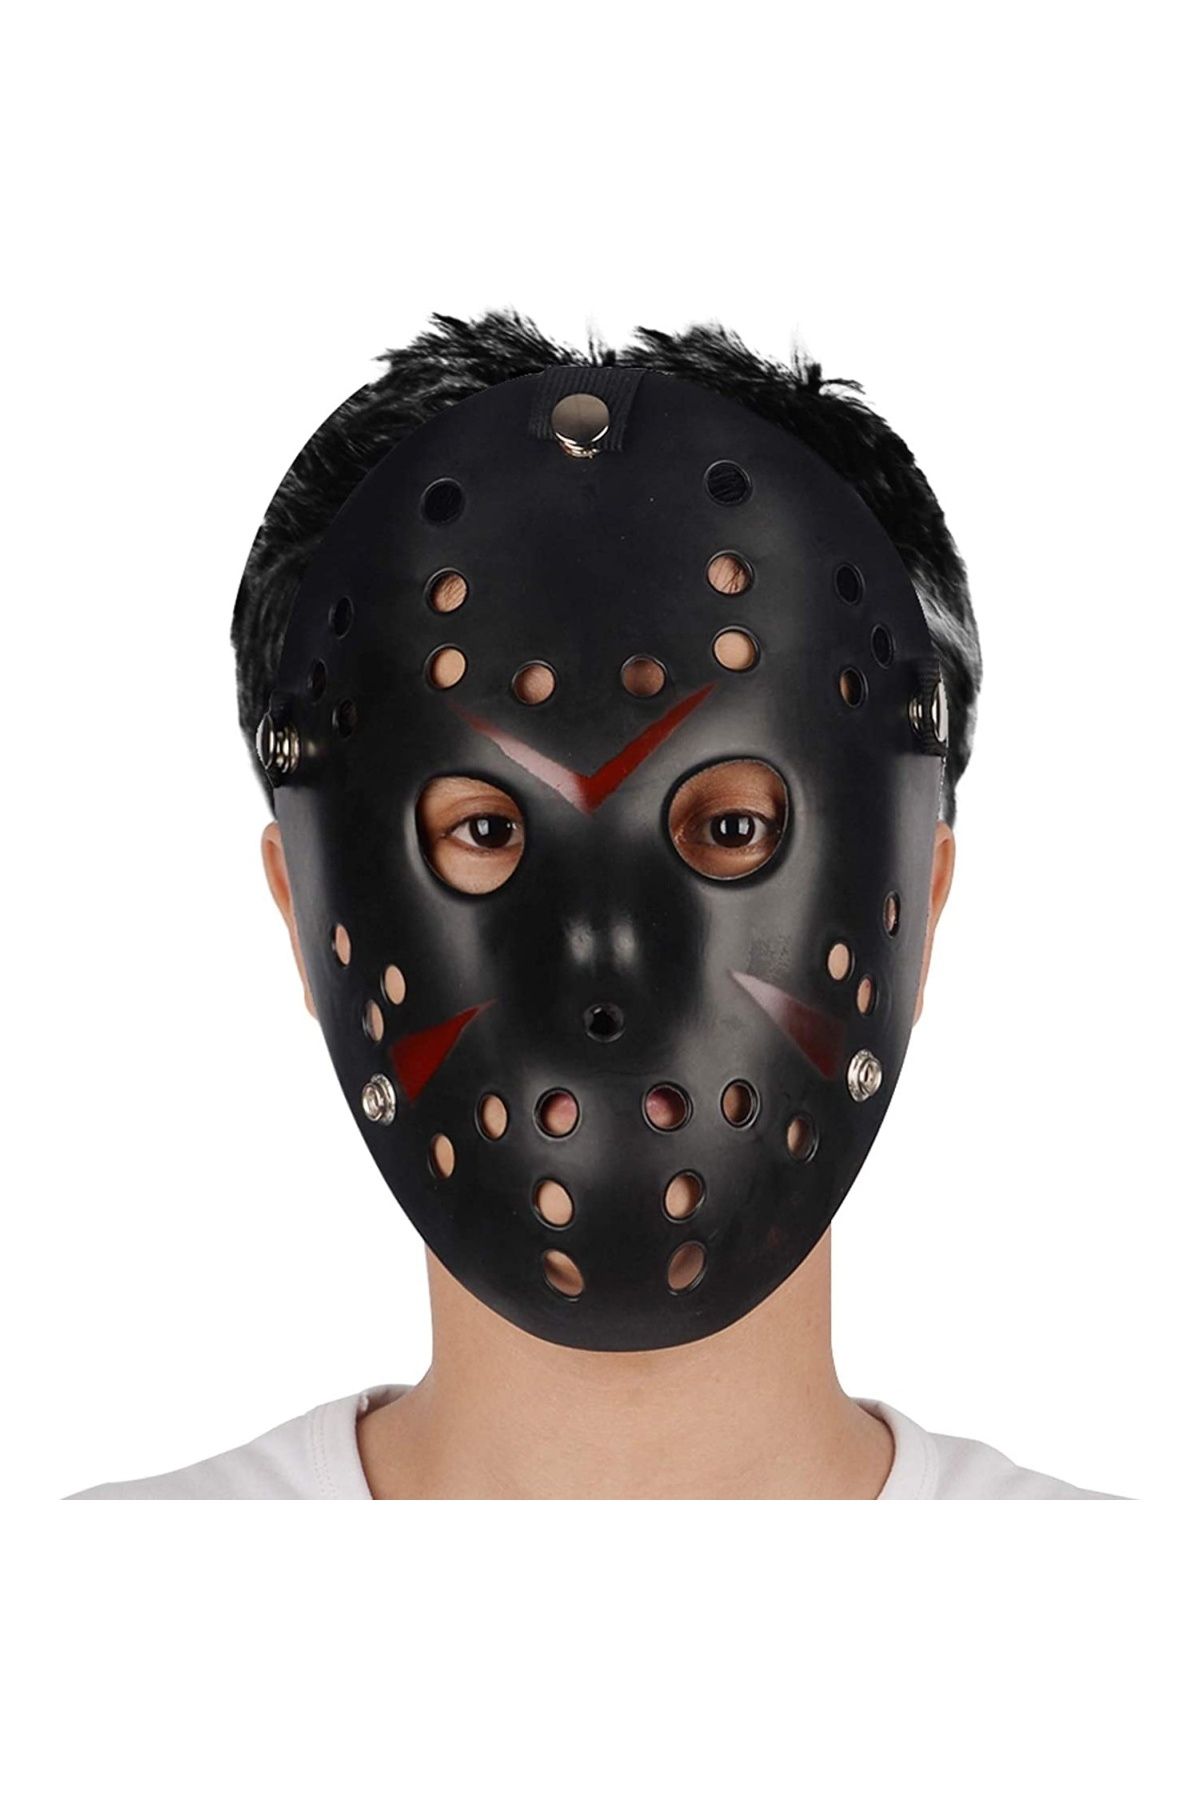 Go İthalat Findit Siyah Renk Kırmızı Çizgili Tam Yüz Hokey Jason Maskesi Hannibal Maskesi (2818)